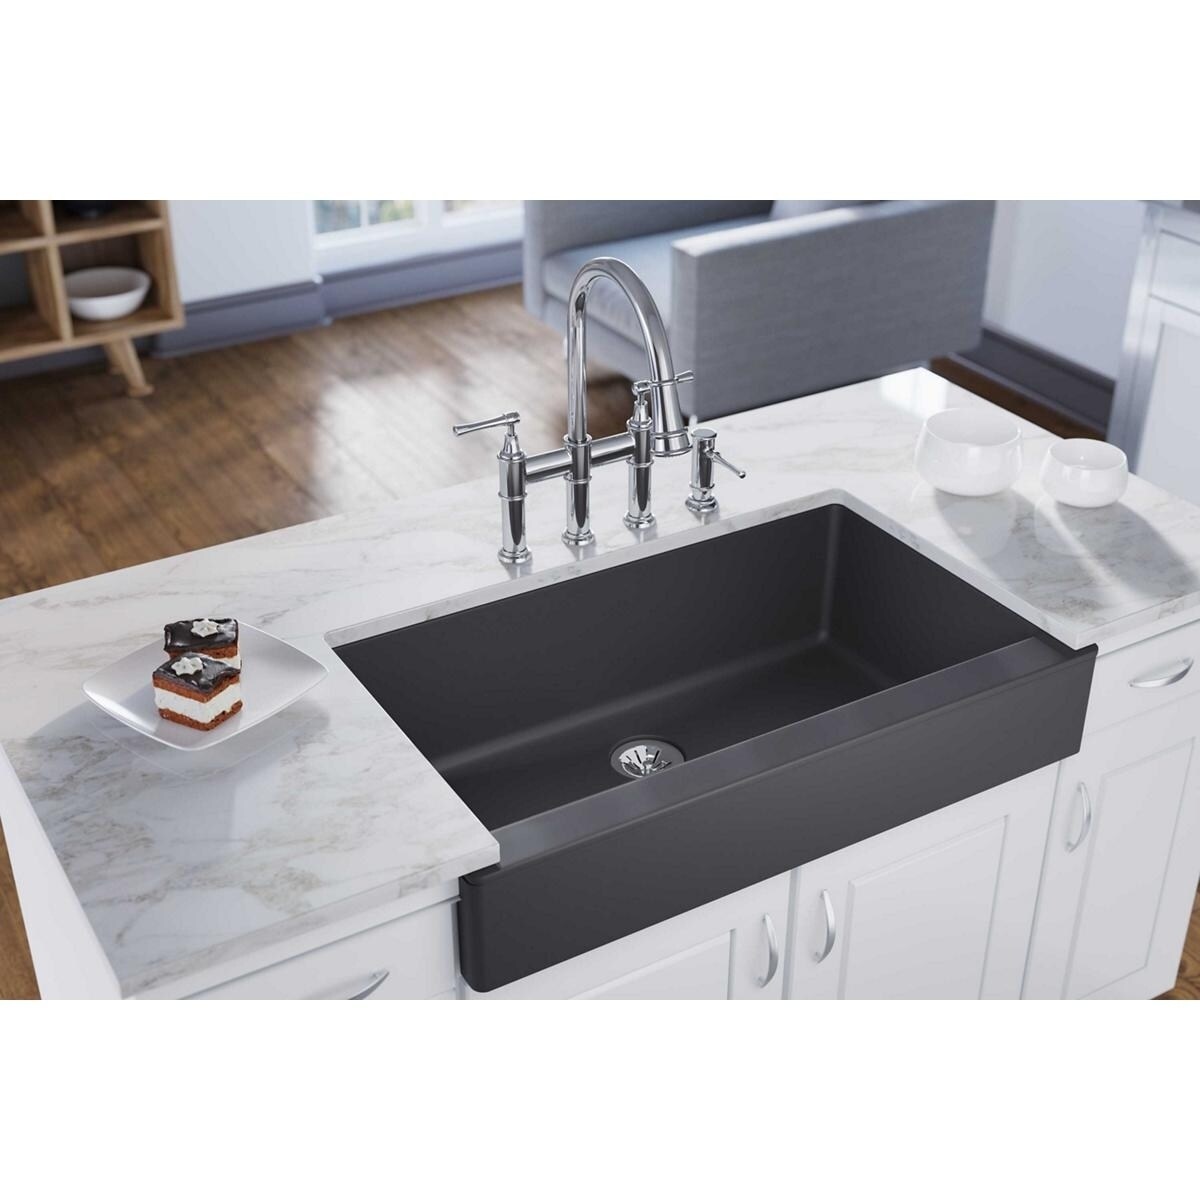 Elkay Quartz Luxe 35 7 8 X 20 15 16 X 9 Single Bowl Farmhouse Sink With Perfect Drain Charcoal